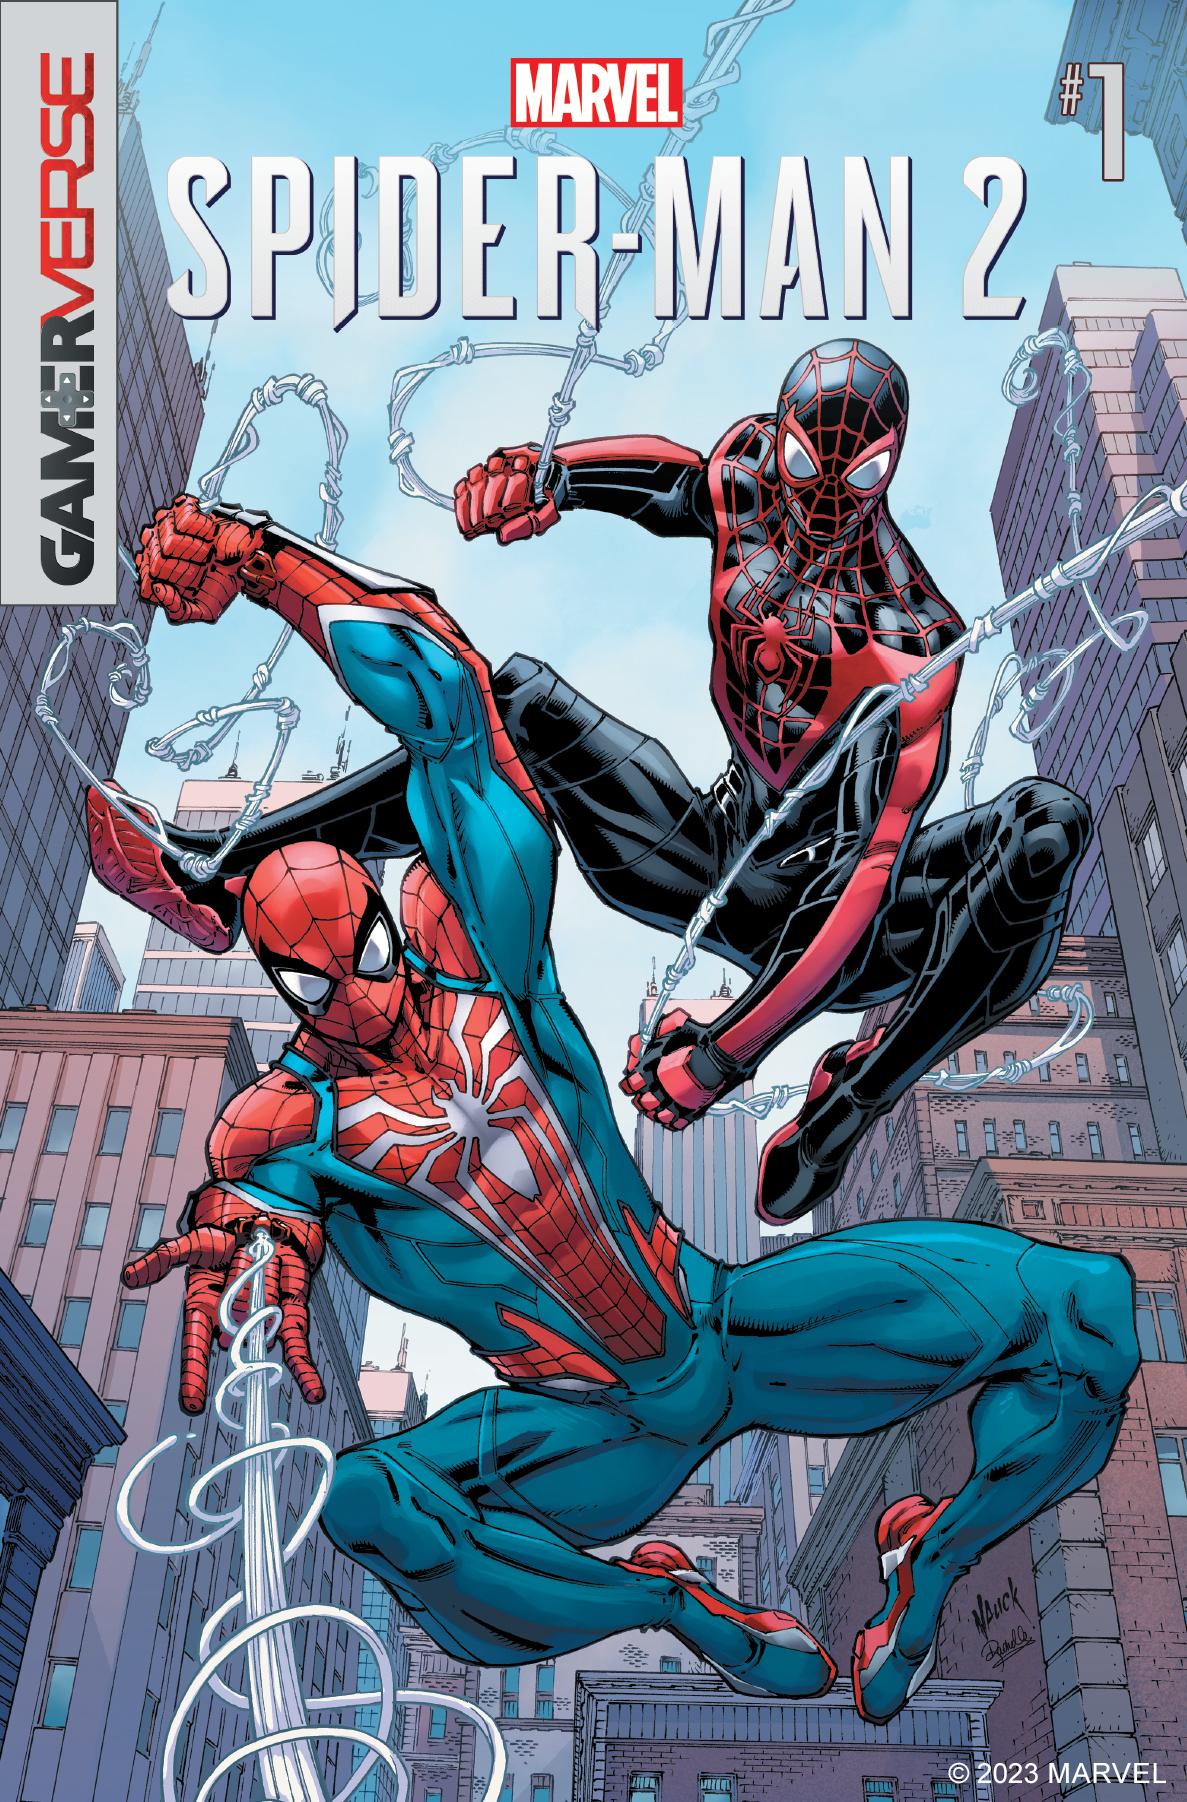 Marvel's Spider-Man 2 comic